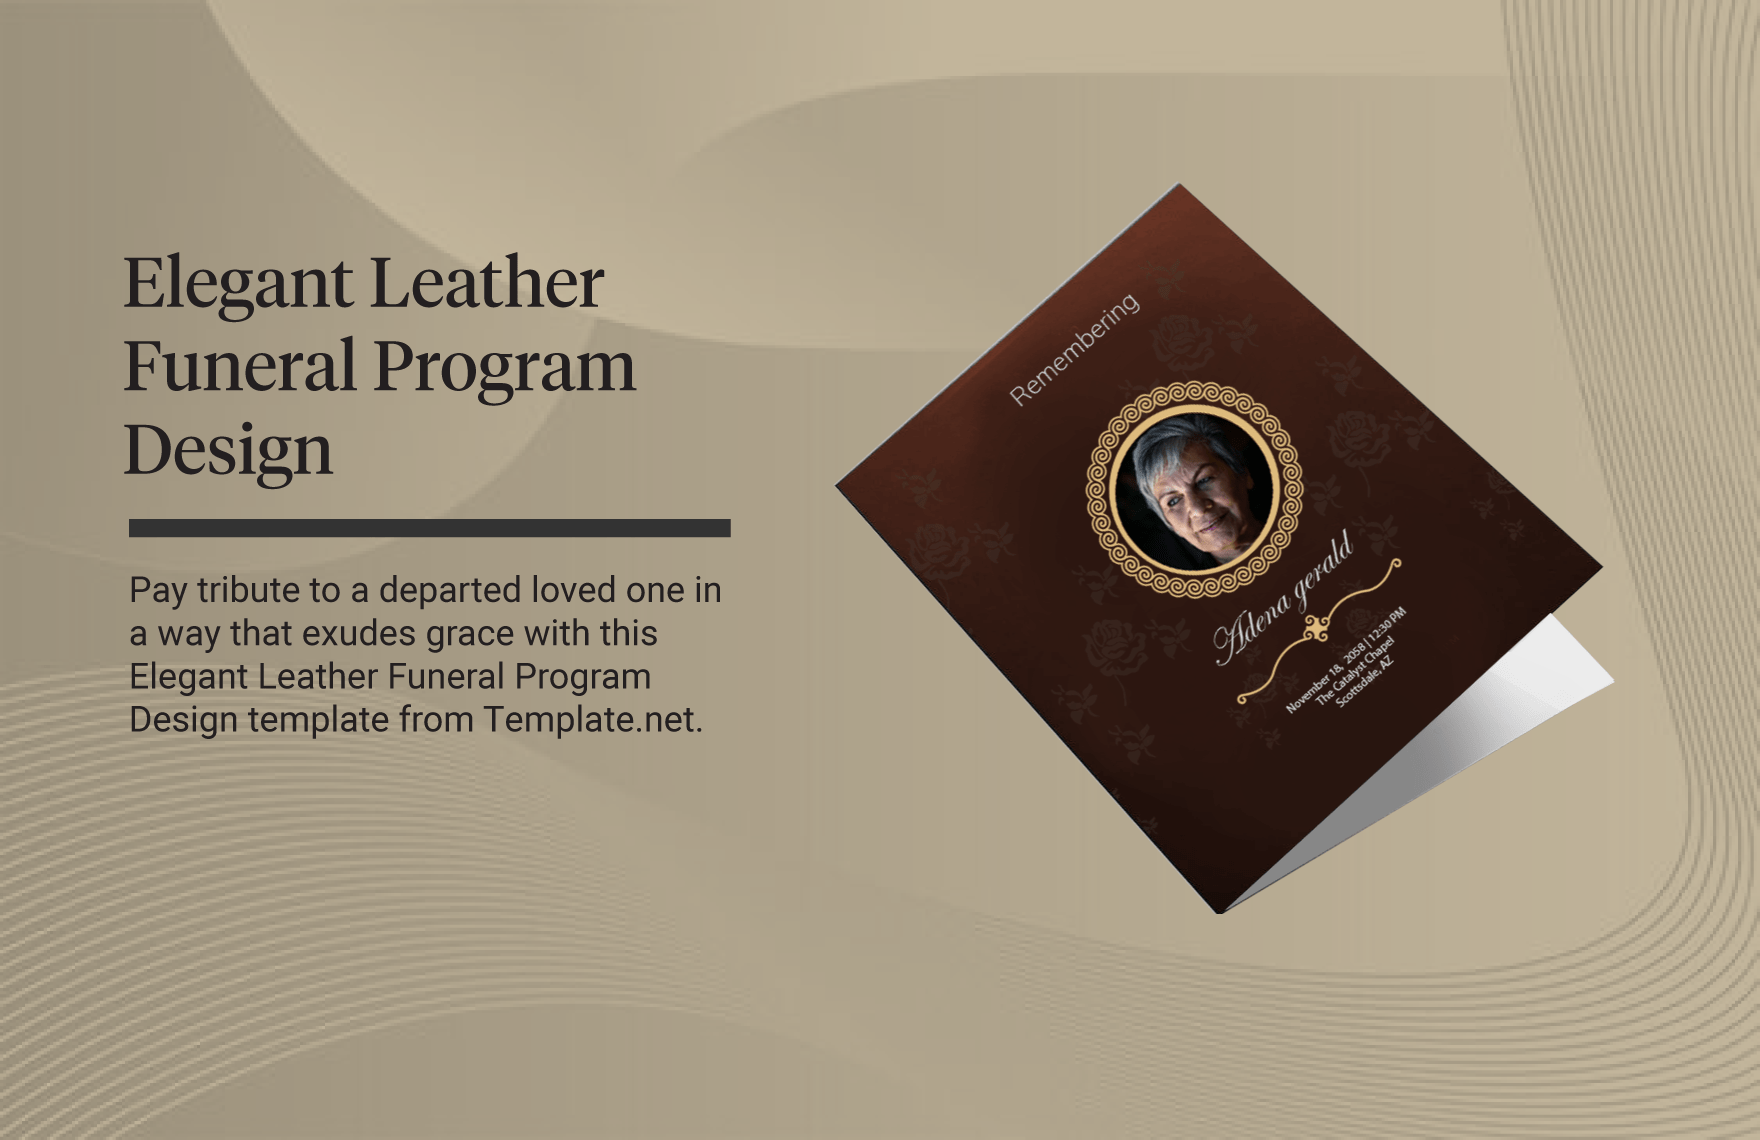 Elegant Leather Funeral Program Design in Word, Illustrator, PSD